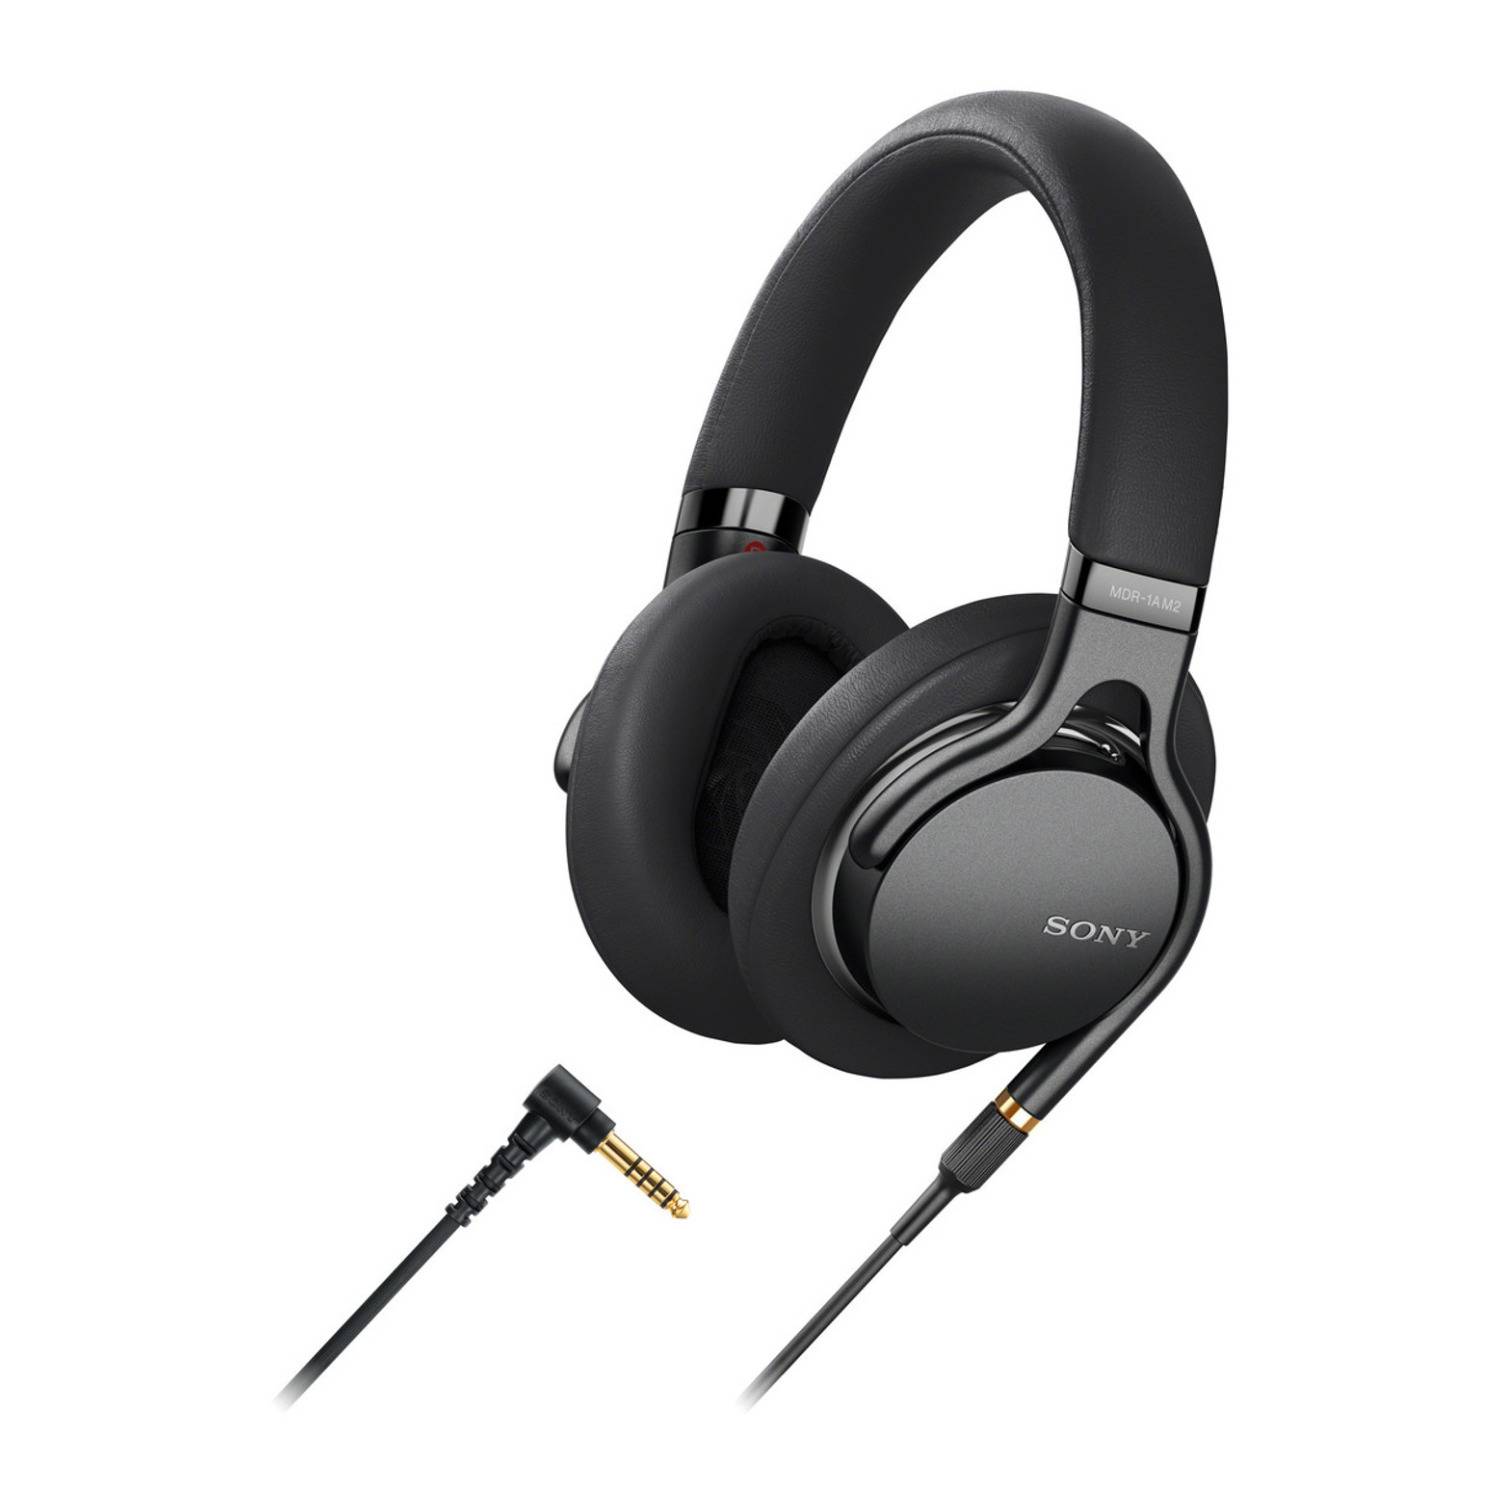 Sony Premium Hi-Res Stereo Headphones with Heavy Bass Beat (Black)